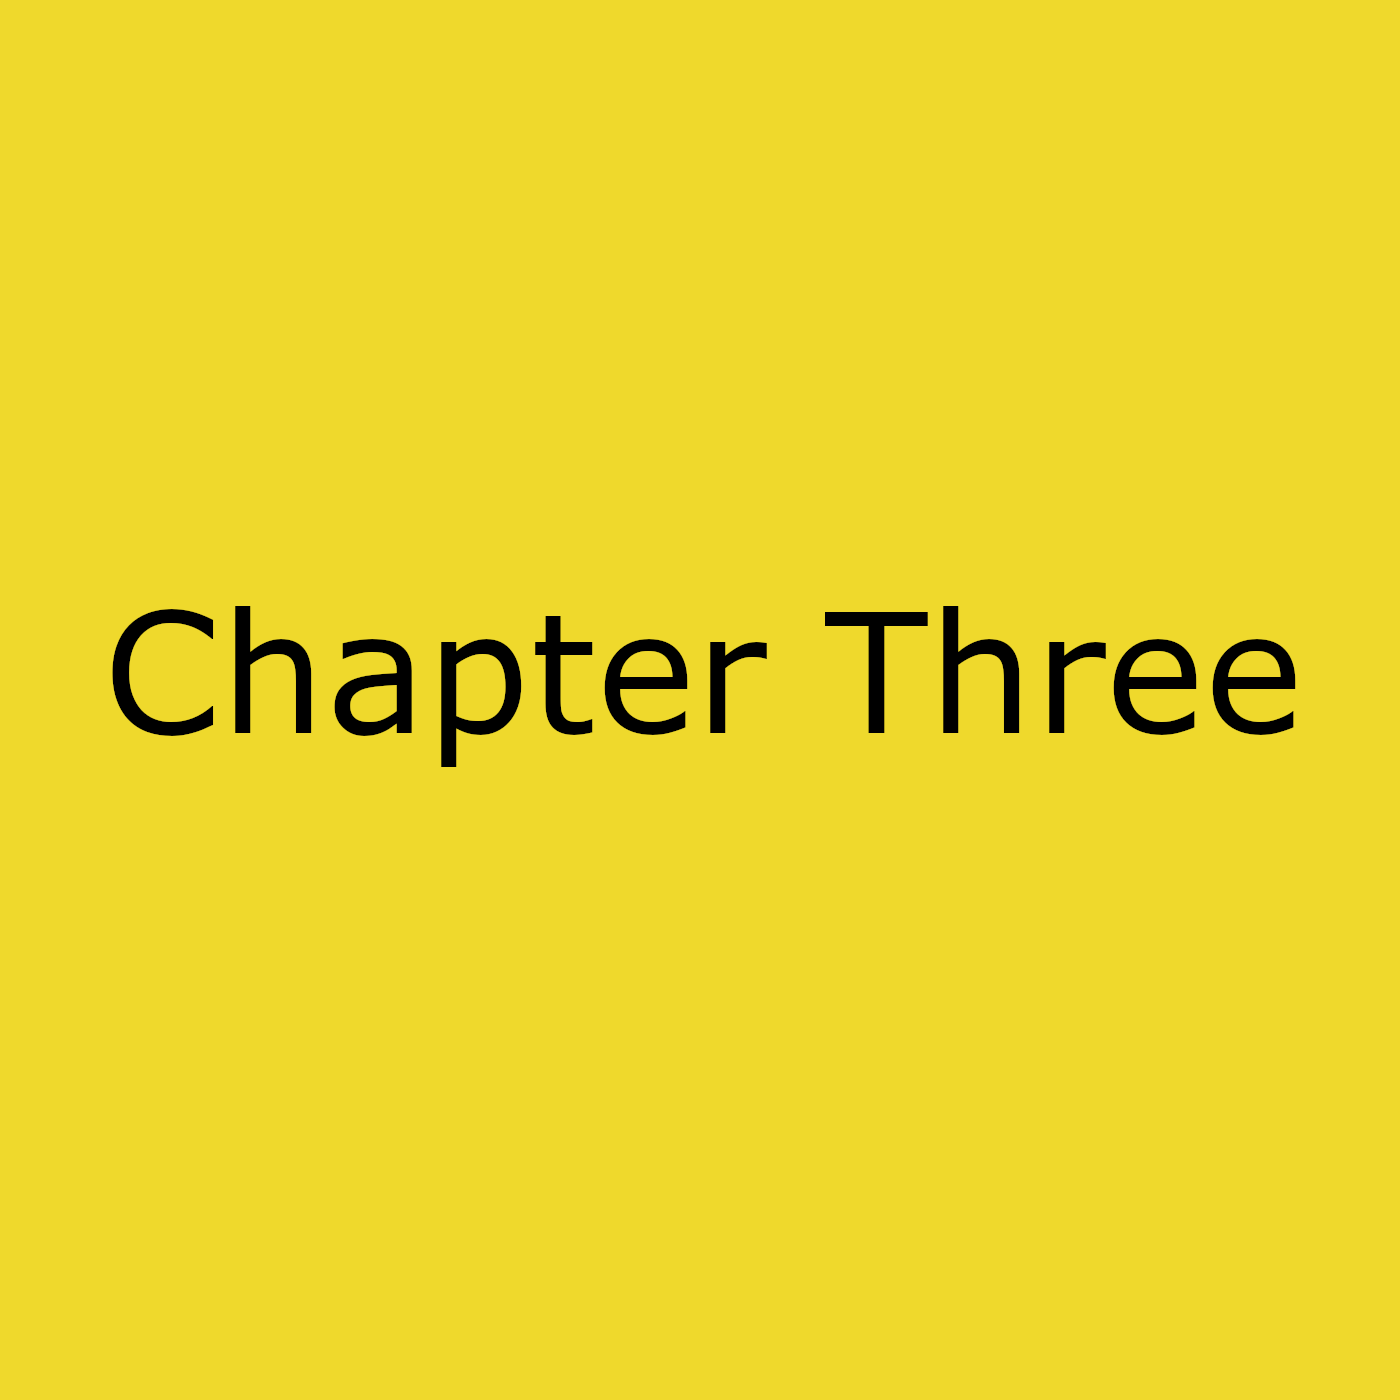 Chapter Three